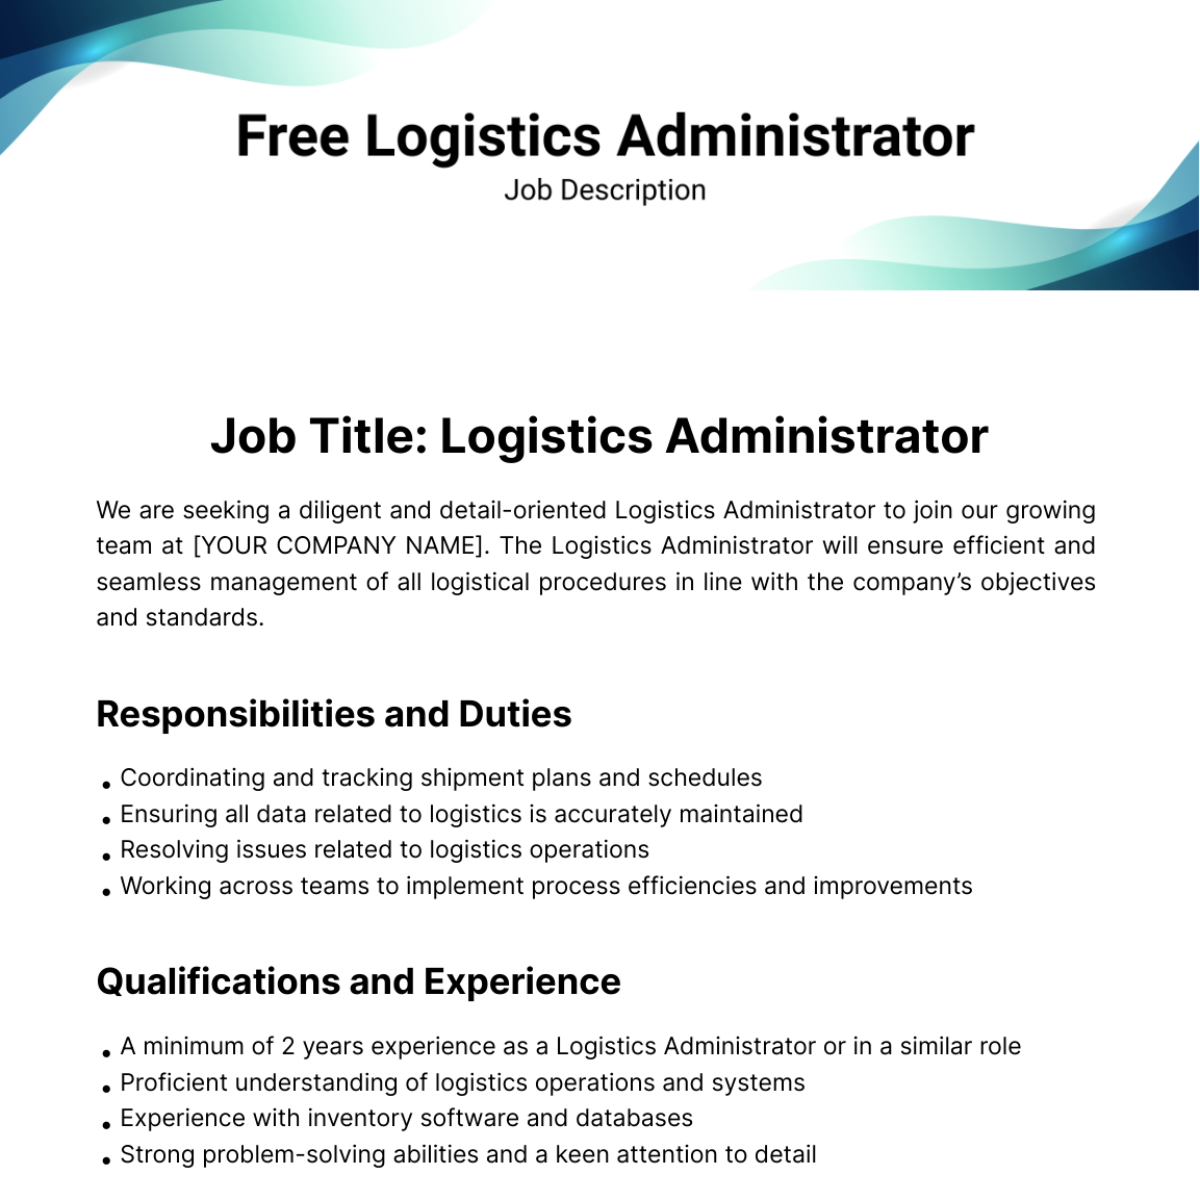 Free Logistics Administrator Job Description Template